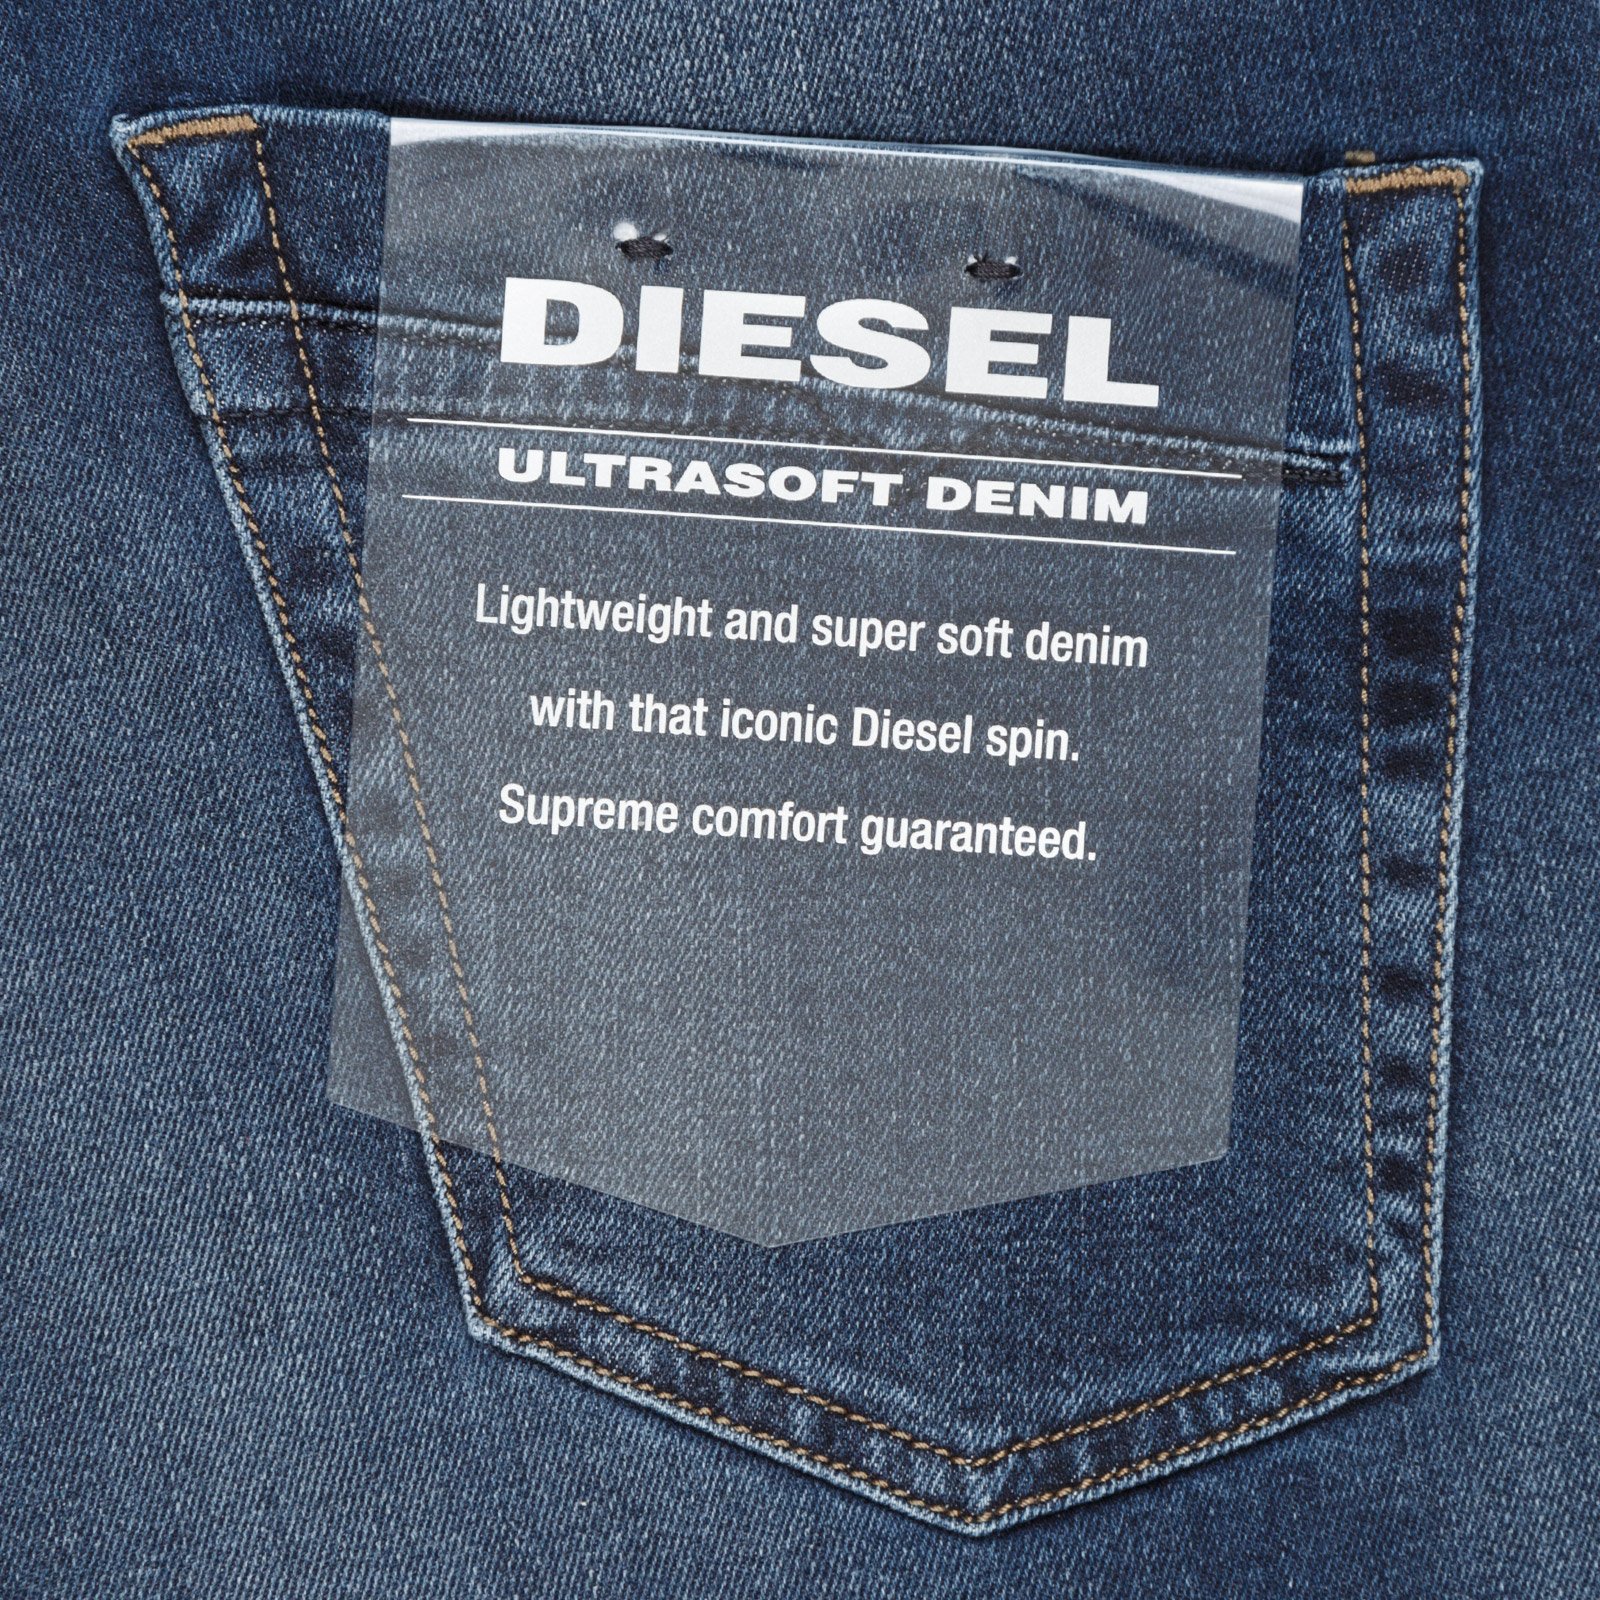 diesel ultra soft denim